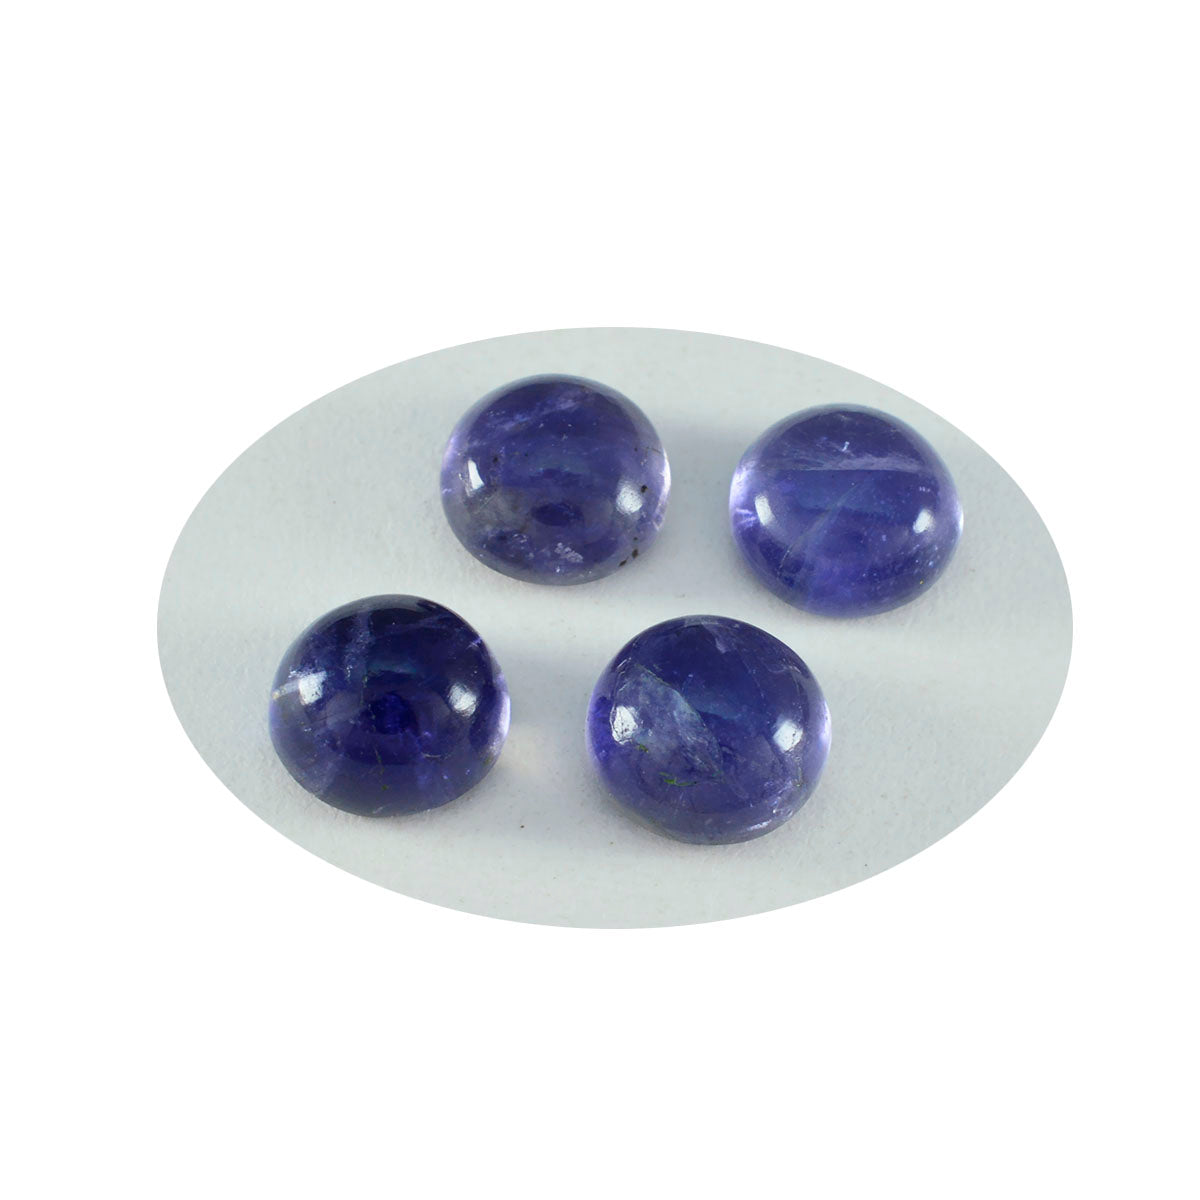 Riyogems 1PC Blue Iolite Cabochon 13x13 mm Round Shape attractive Quality Stone